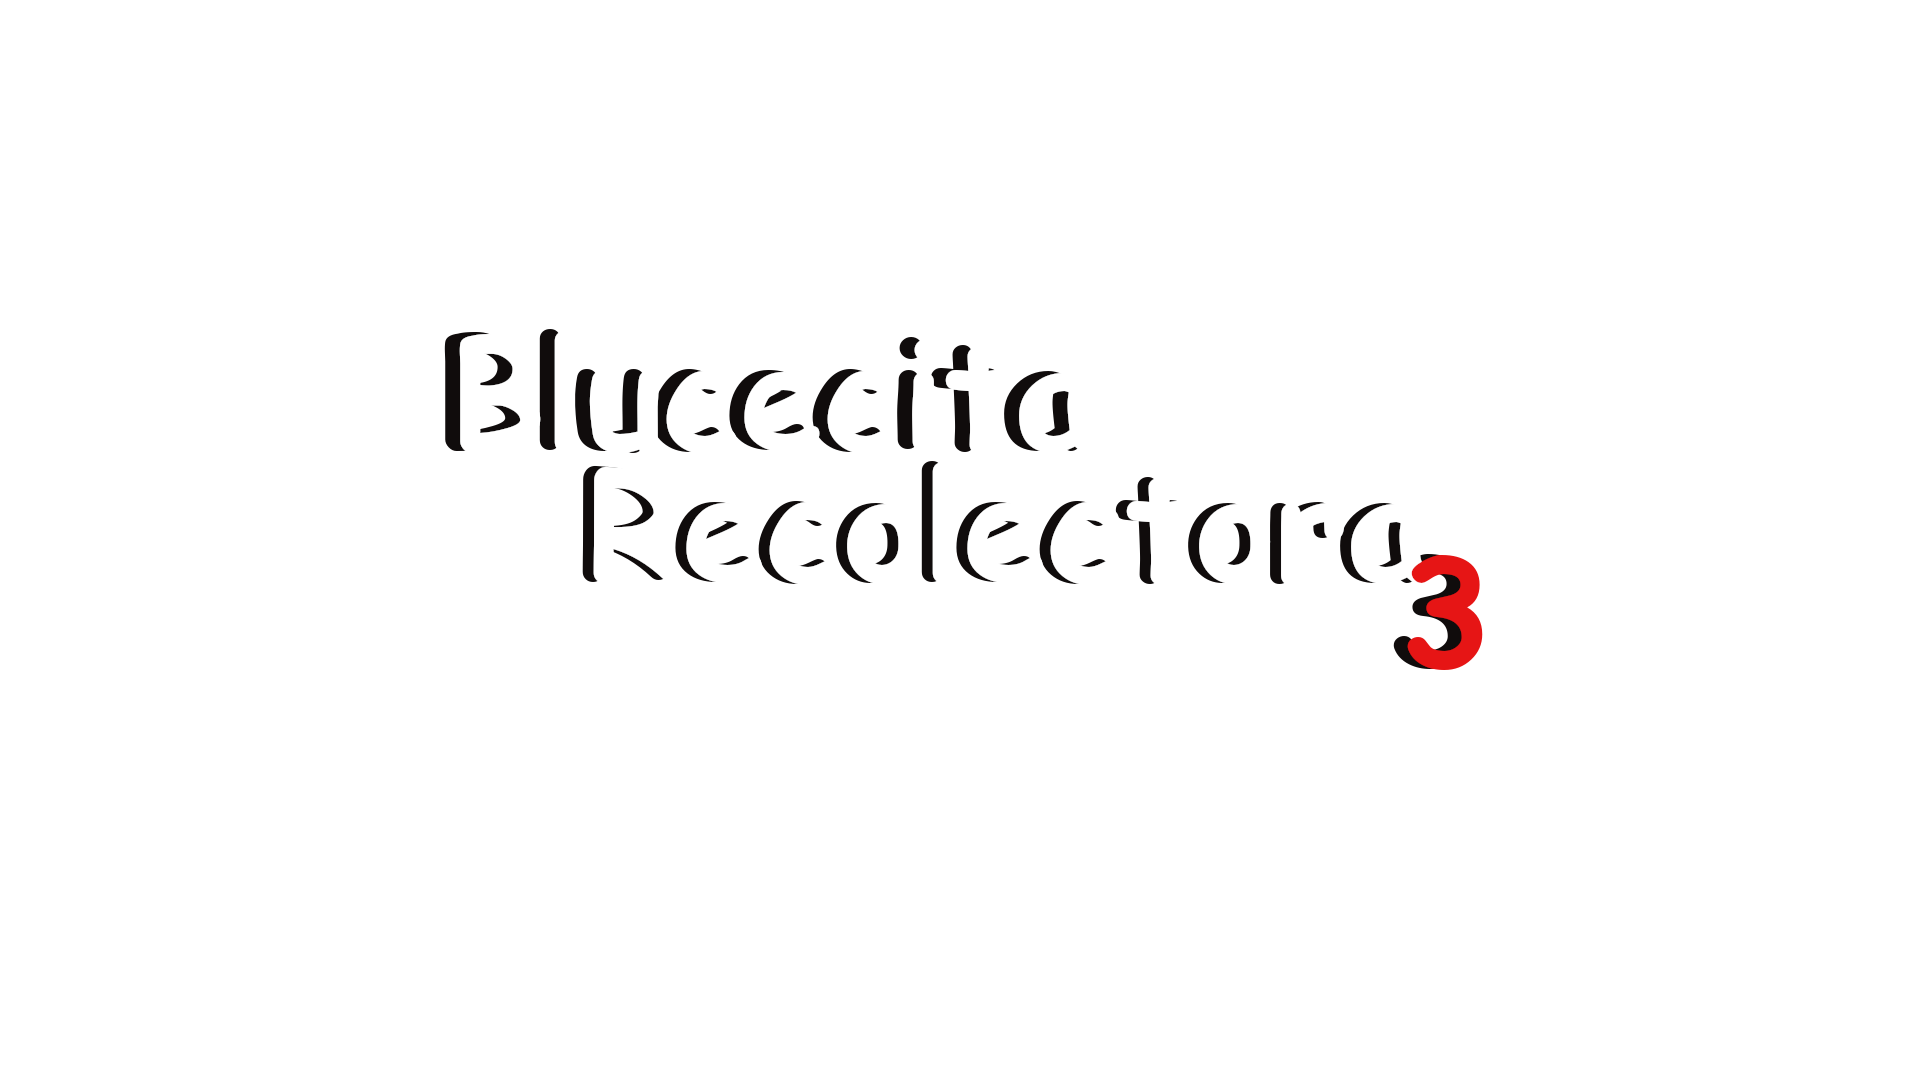 Blucecita Recolectora #3